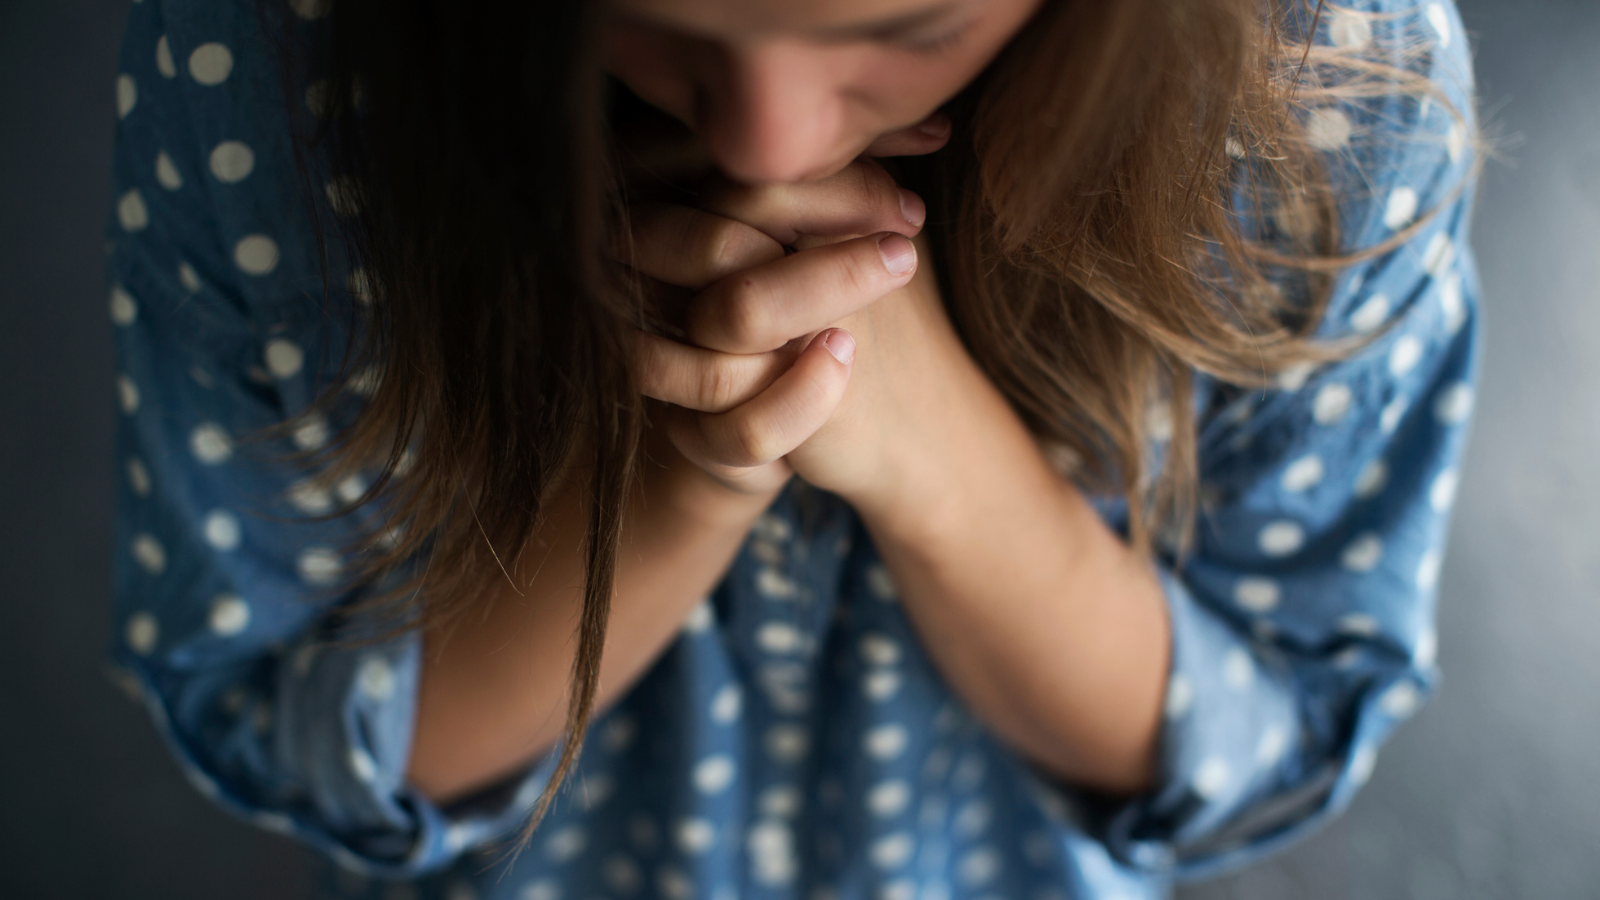 A woman in blue shirt praying.